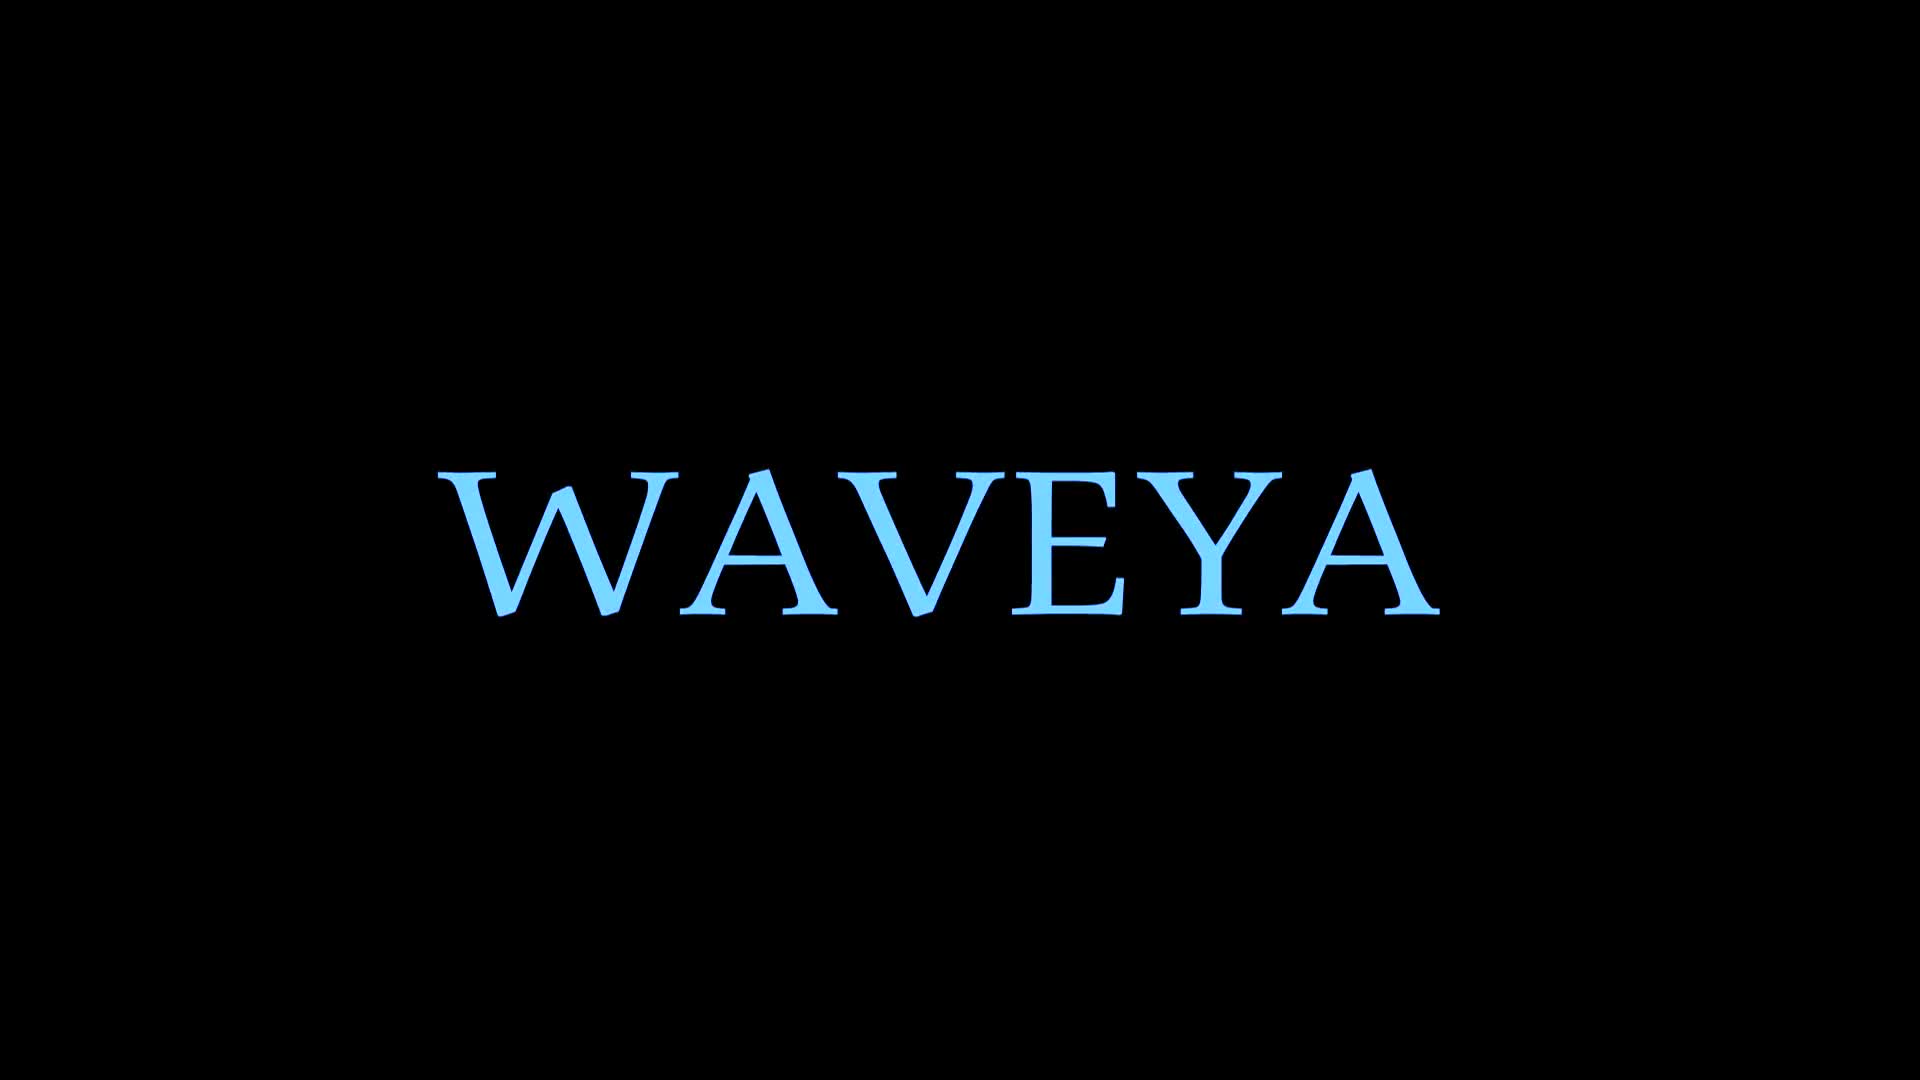 Waveya_ iKON – 리듬 타 (RHYTHM TA) cover dance